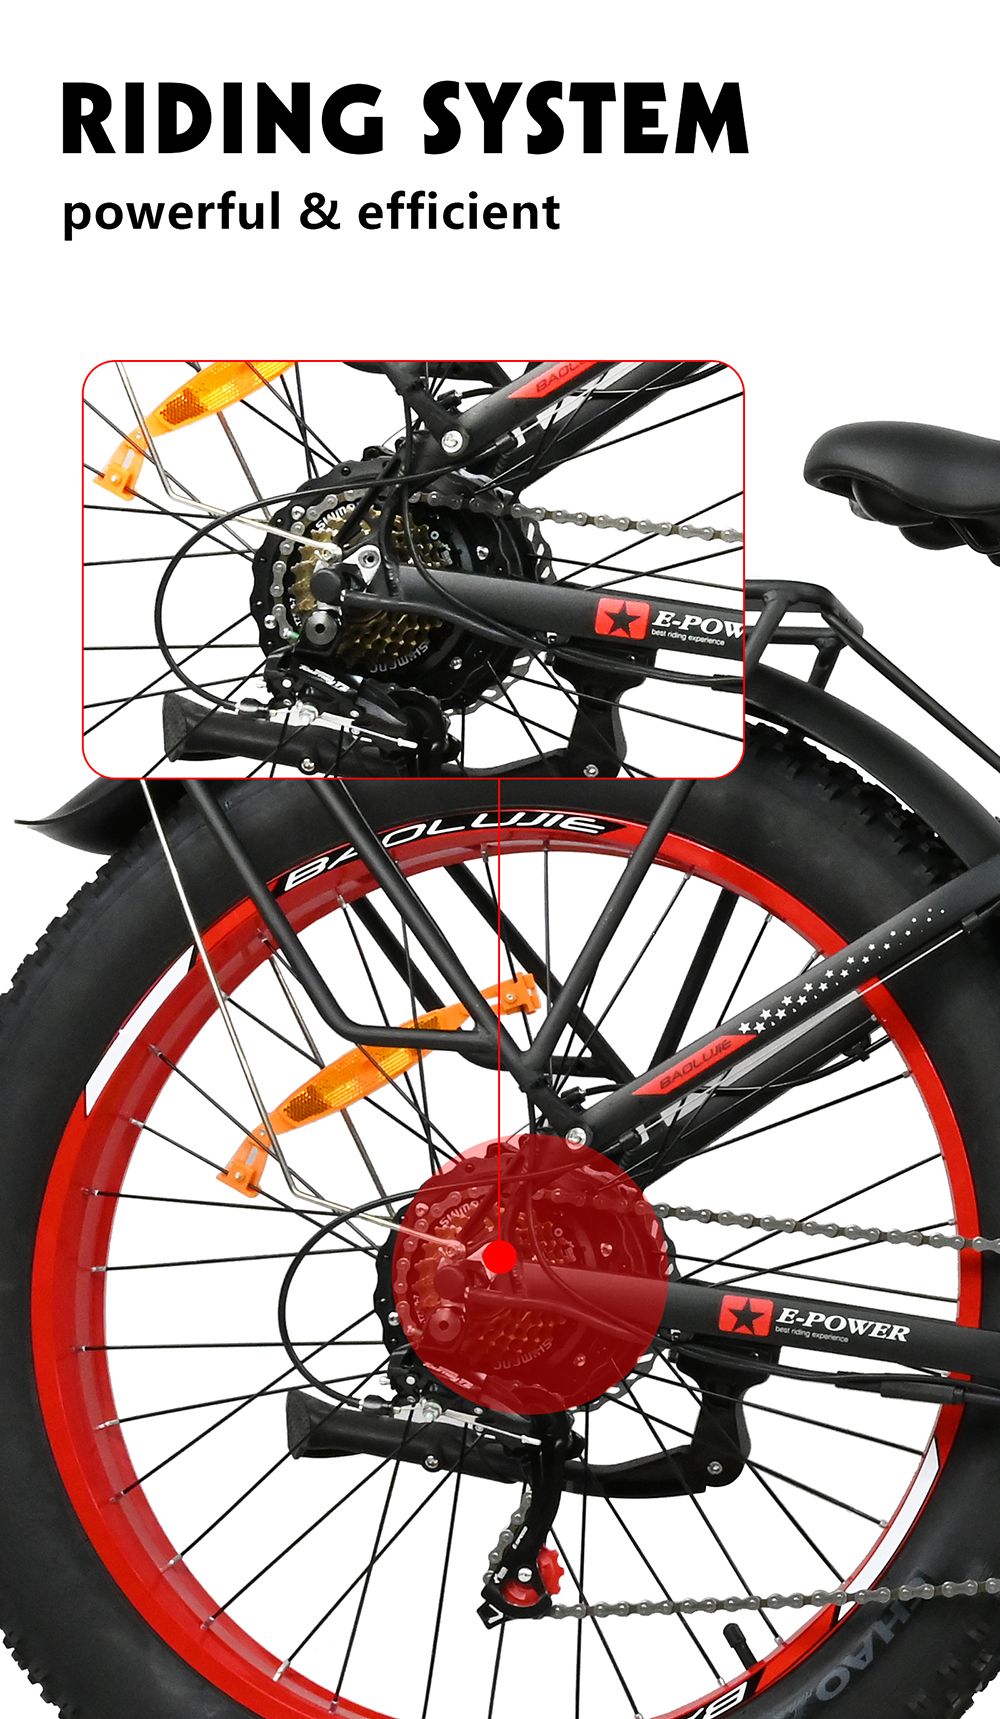 Bicicleta eléctrica BAOLUJIE DP2619, neumático grueso de 26 * 4.0 pulgadas, motor de 750 W, batería de 48 V 13 Ah, velocidad máxima de 45 km / h, alcance máximo de 45 km, pantalla LCD SHIMANO de 7 velocidades - Azul